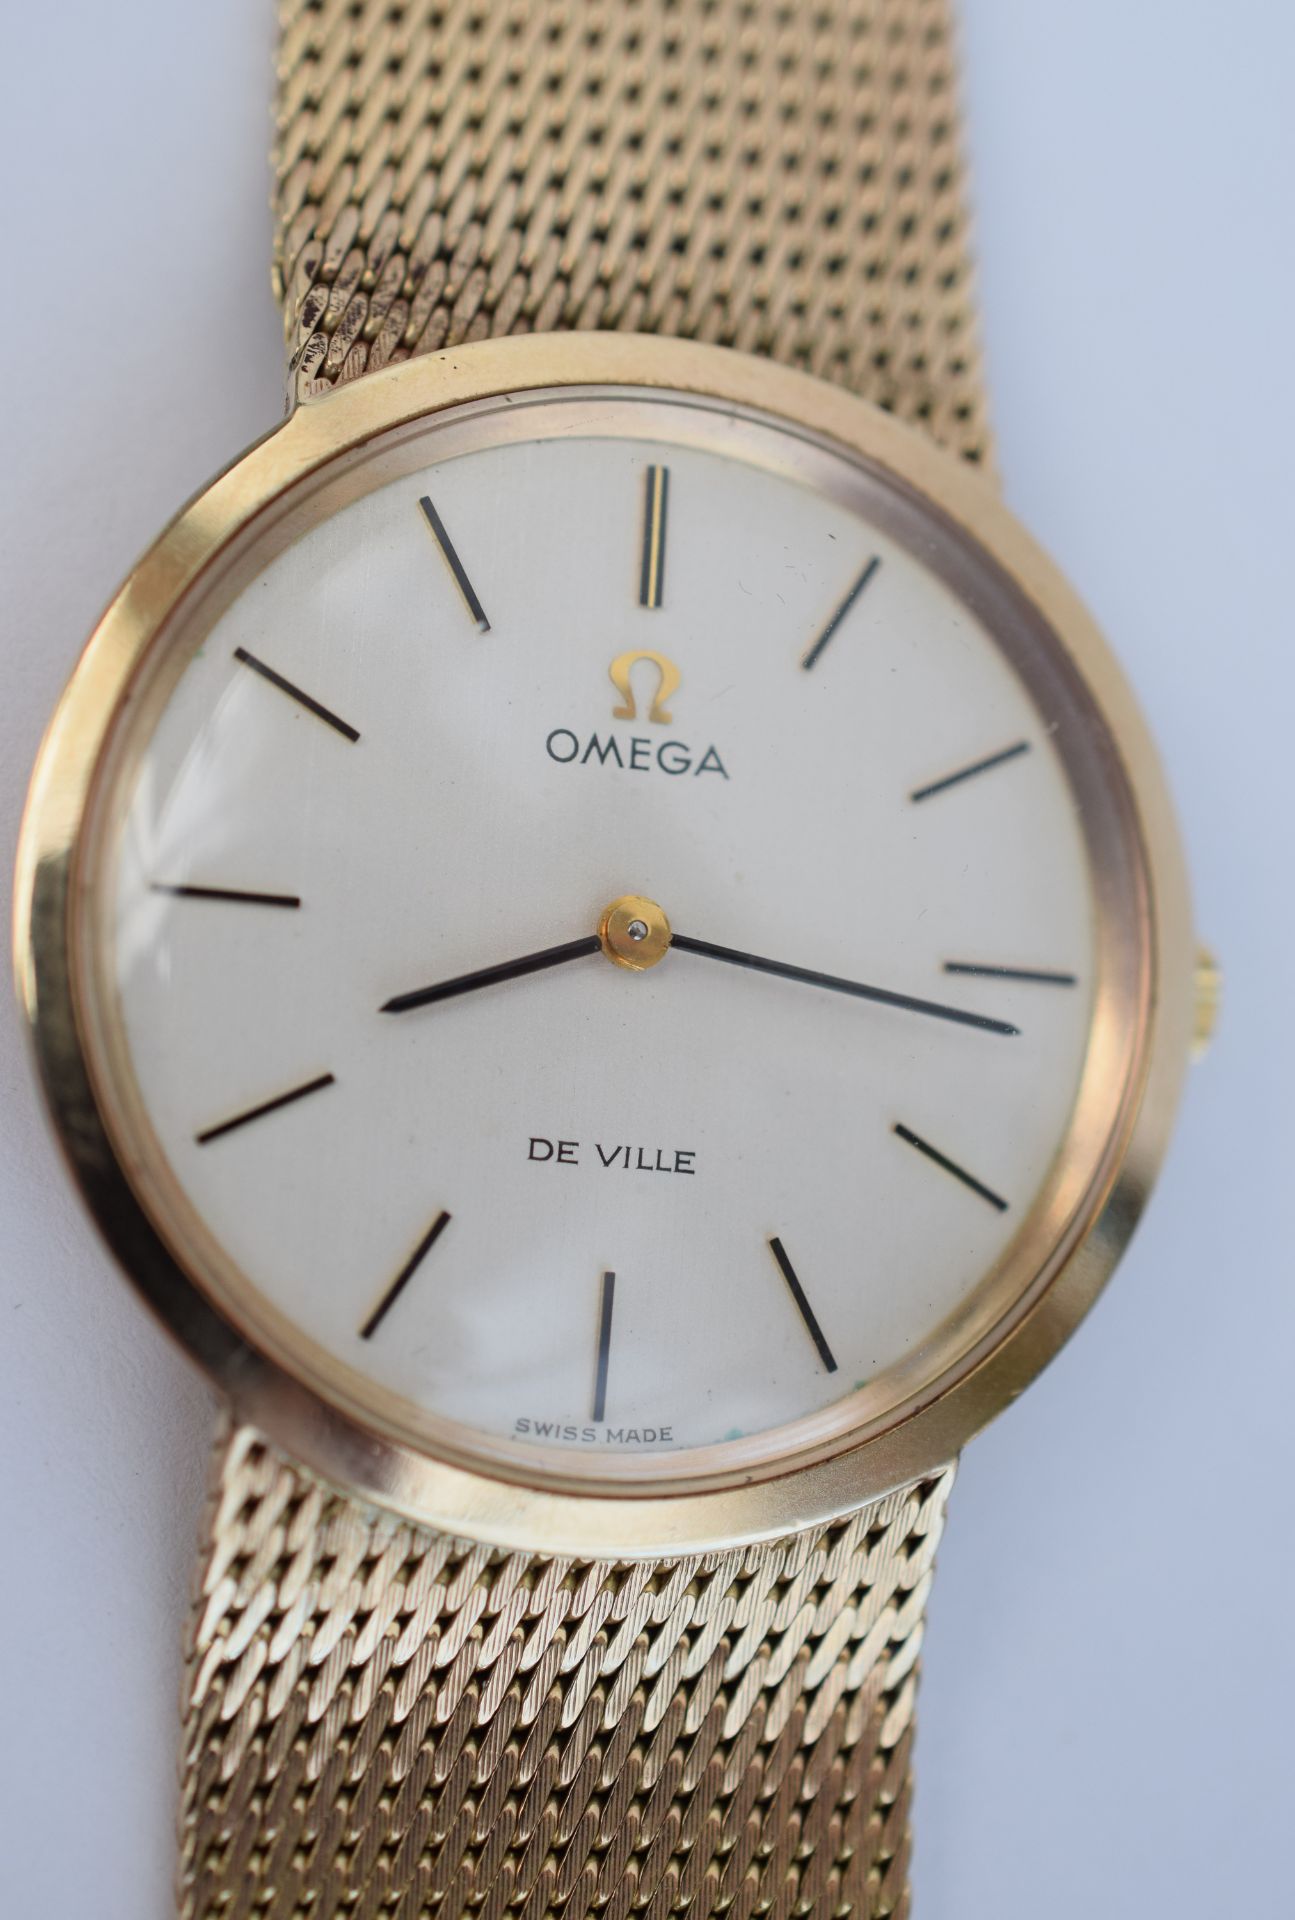 9ct Gold Omega De Ville Gentleman's Wristwatch On 9ct Solid Gold Bracelet**reserve lowered 8.10.16** - Image 5 of 13